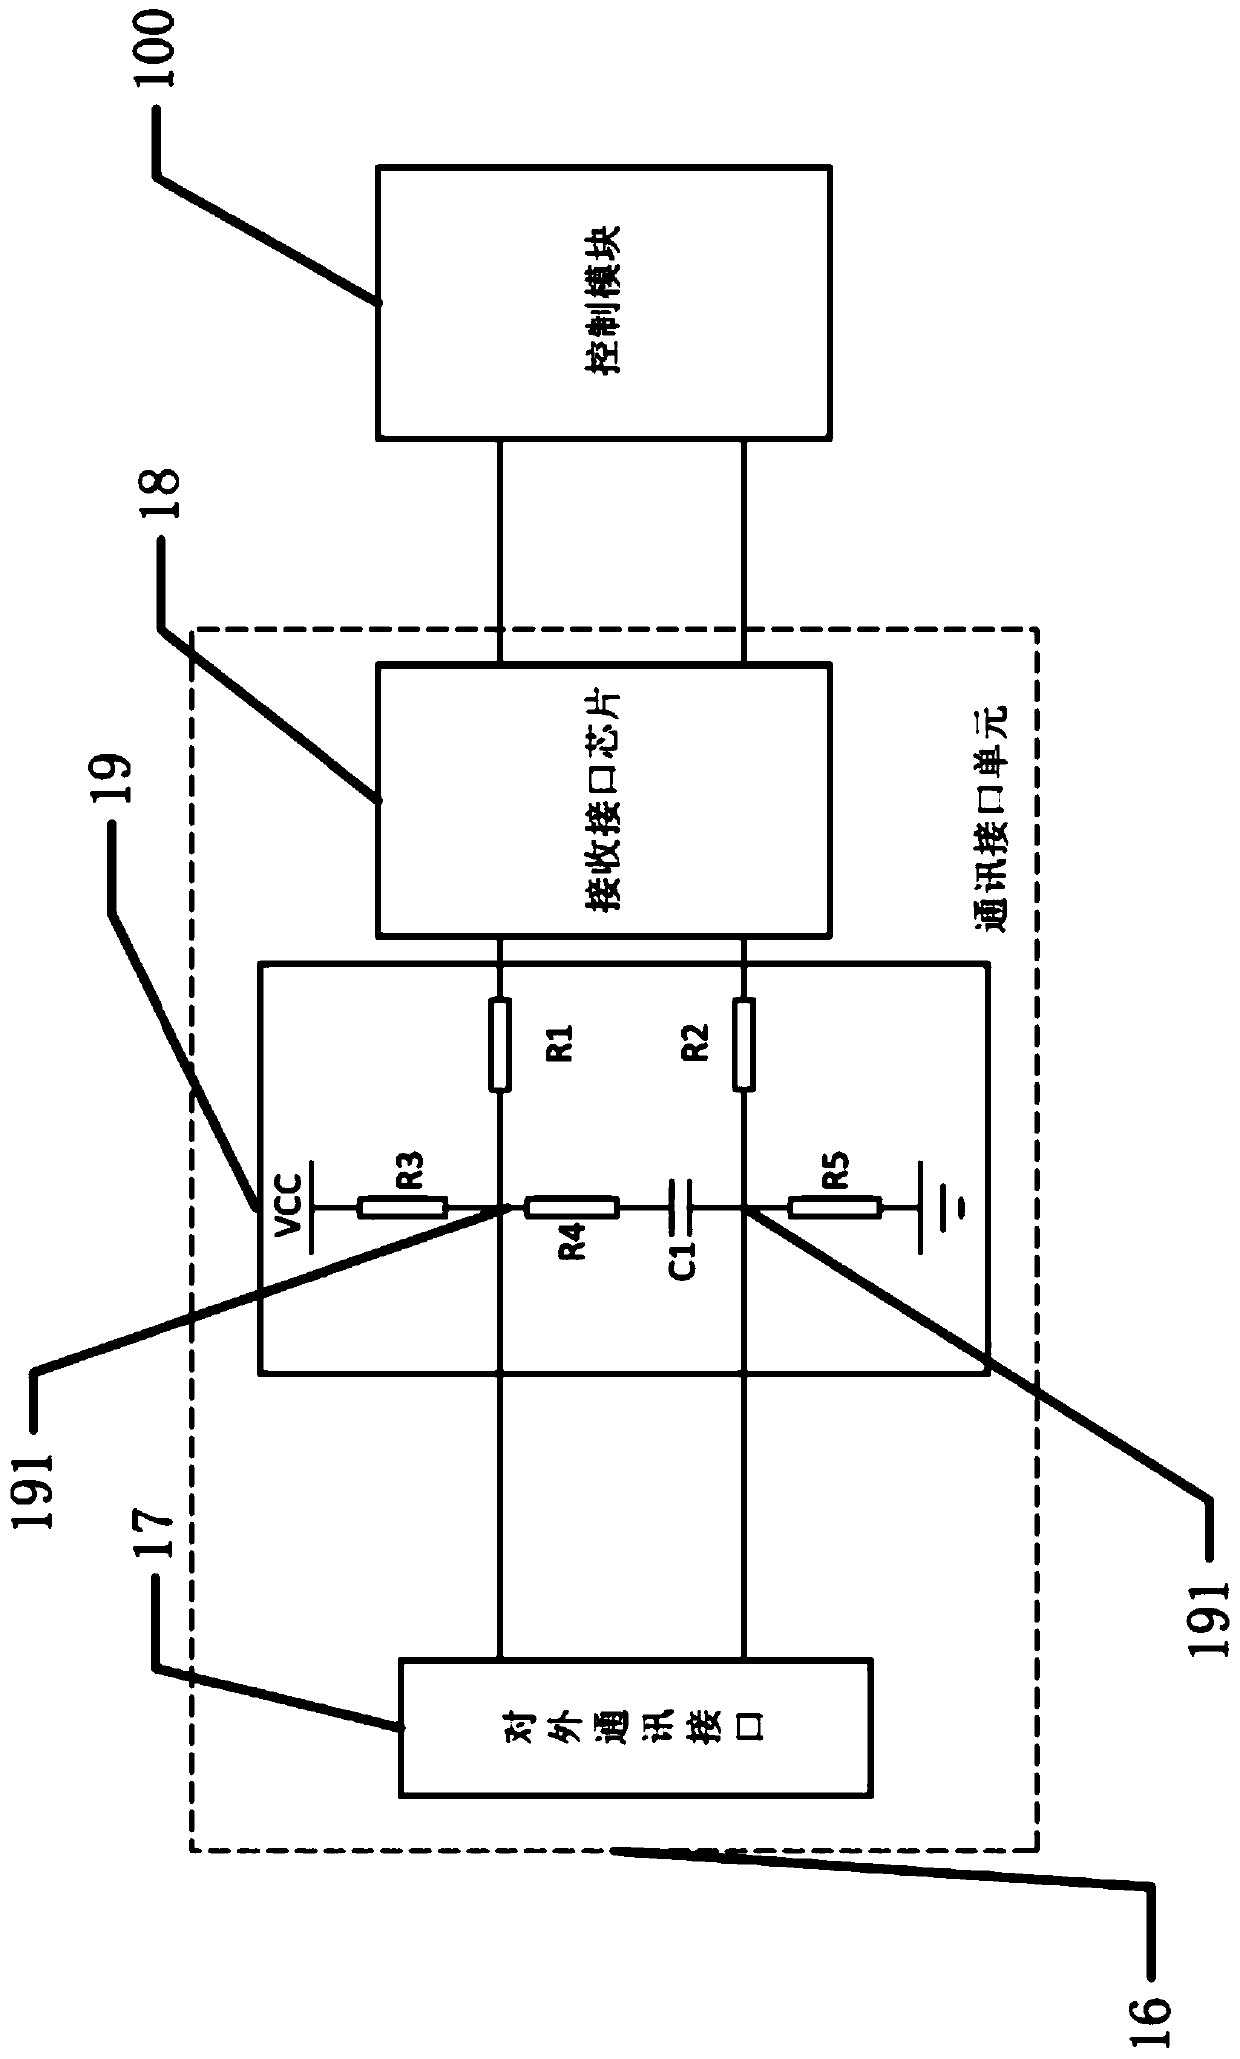 An imaging control circuit of a multipurpose space camera and the multipurpose space camera